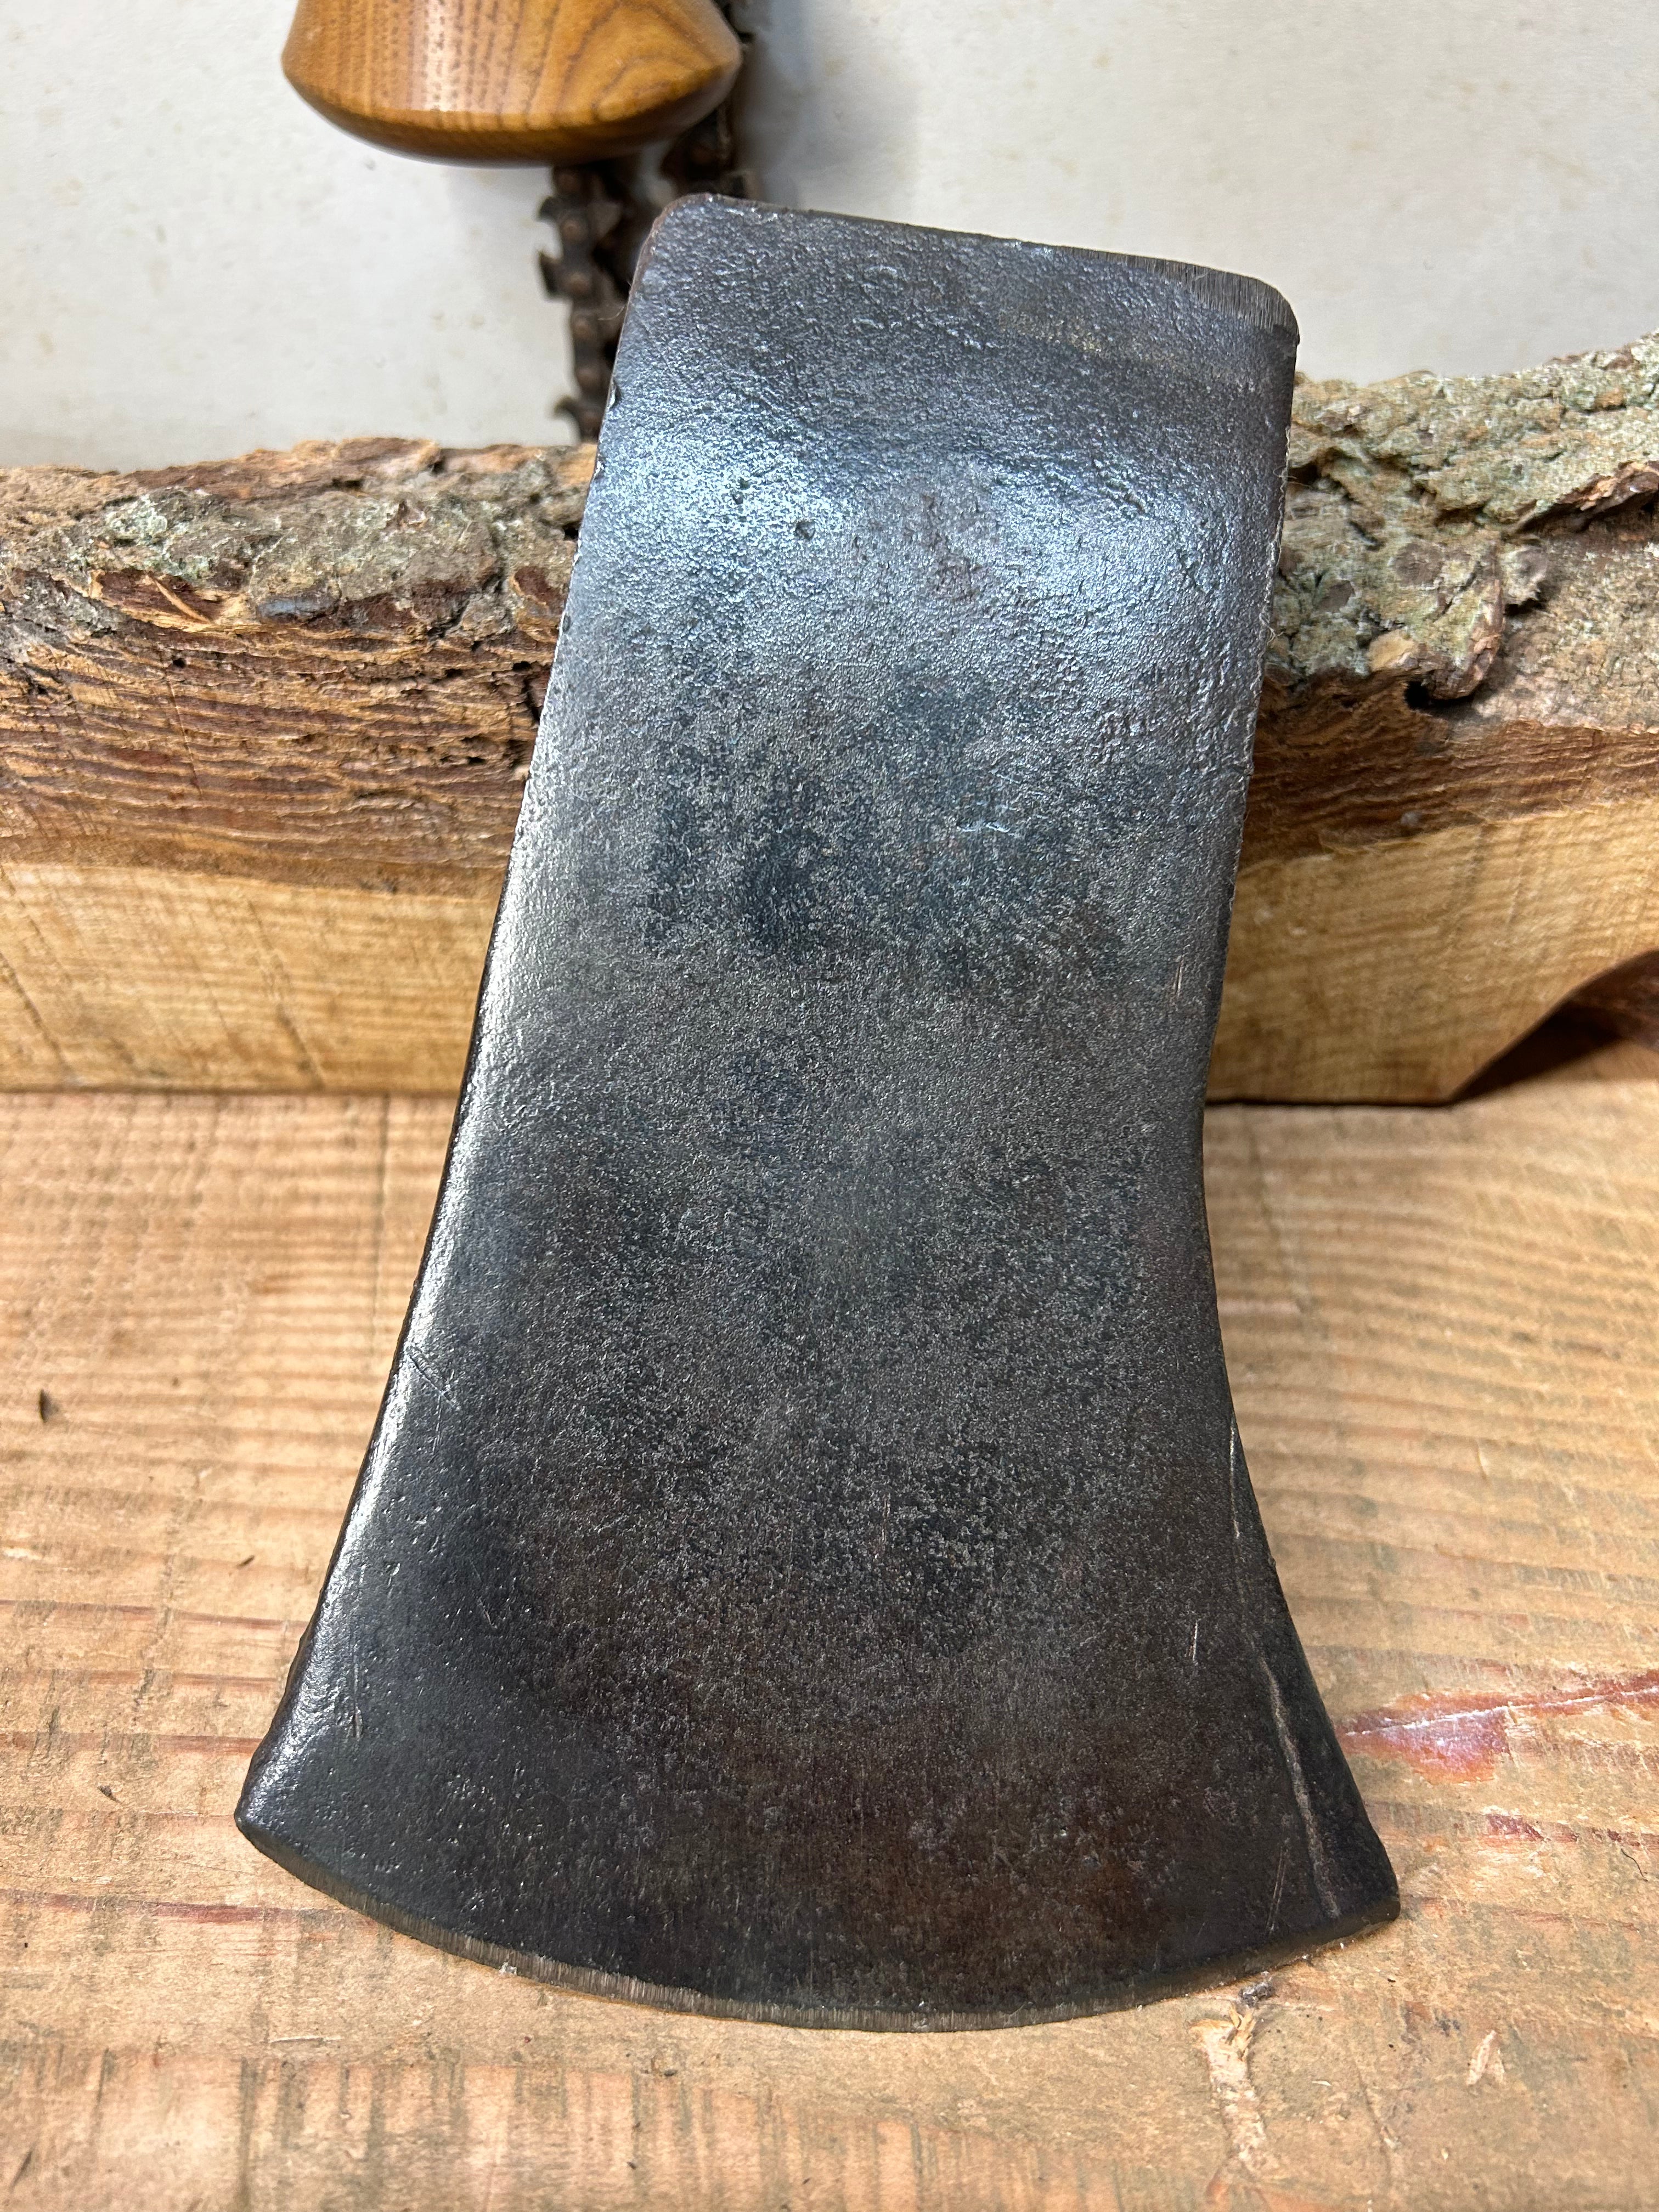 Vintage Mann 3.5lb Michigan pattern axe head